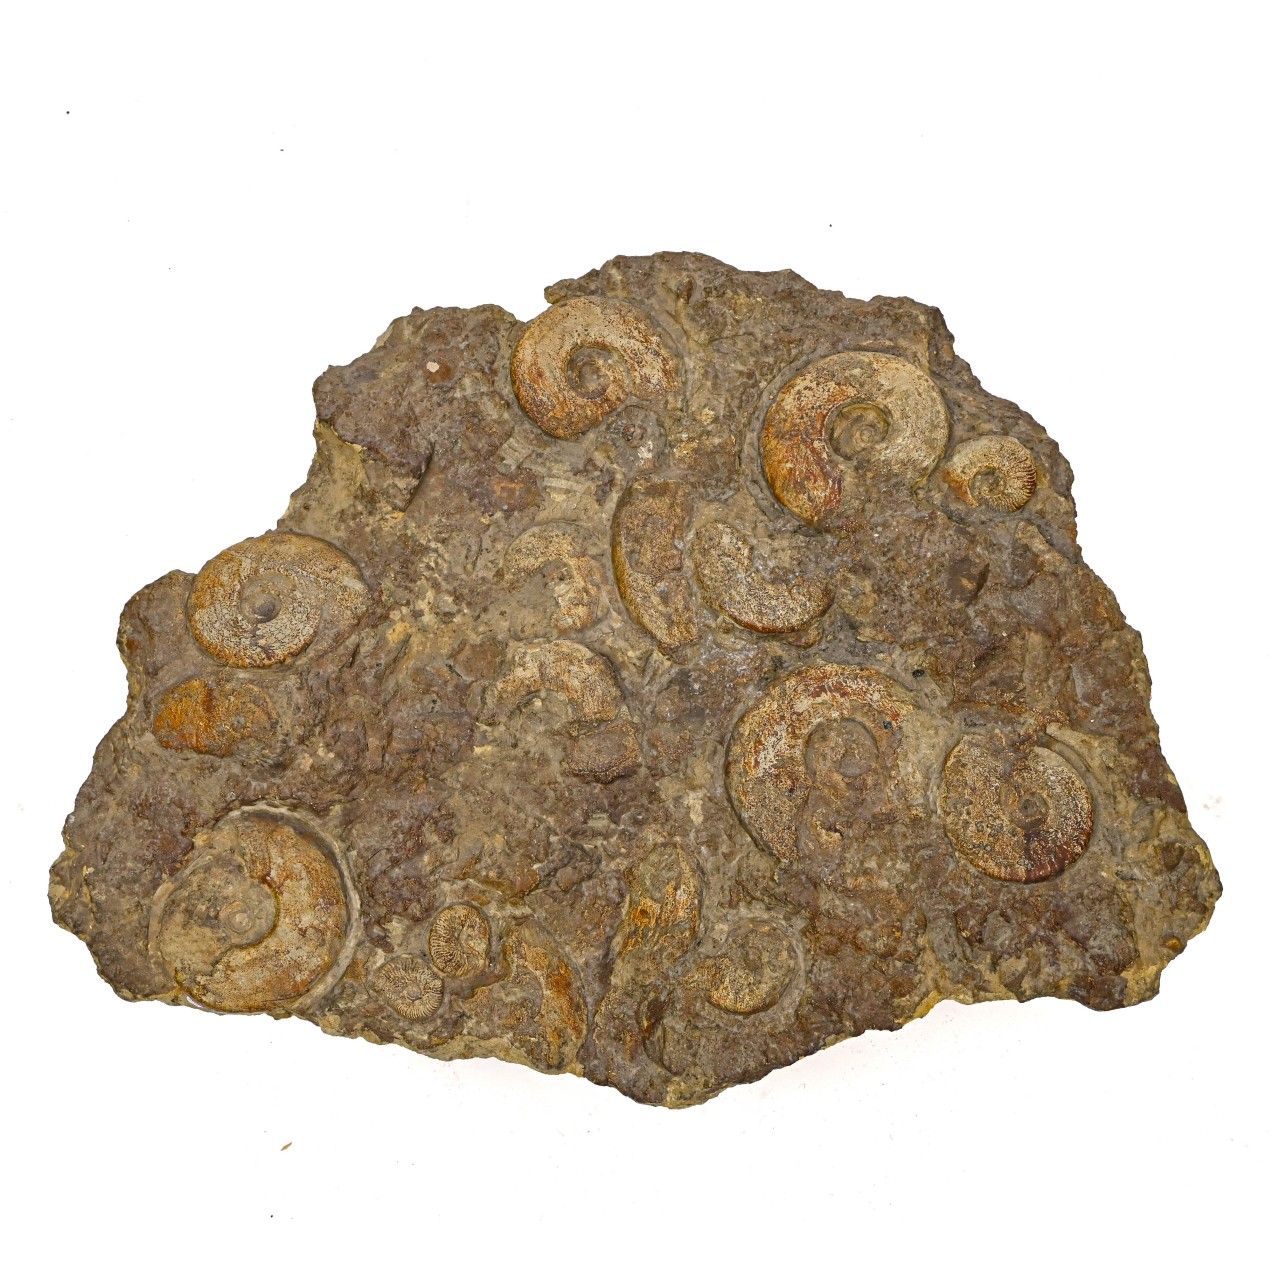 Null JURASSIQUE MOYEN

Important fond marin



constitué d'ammonites fossilisées&hellip;